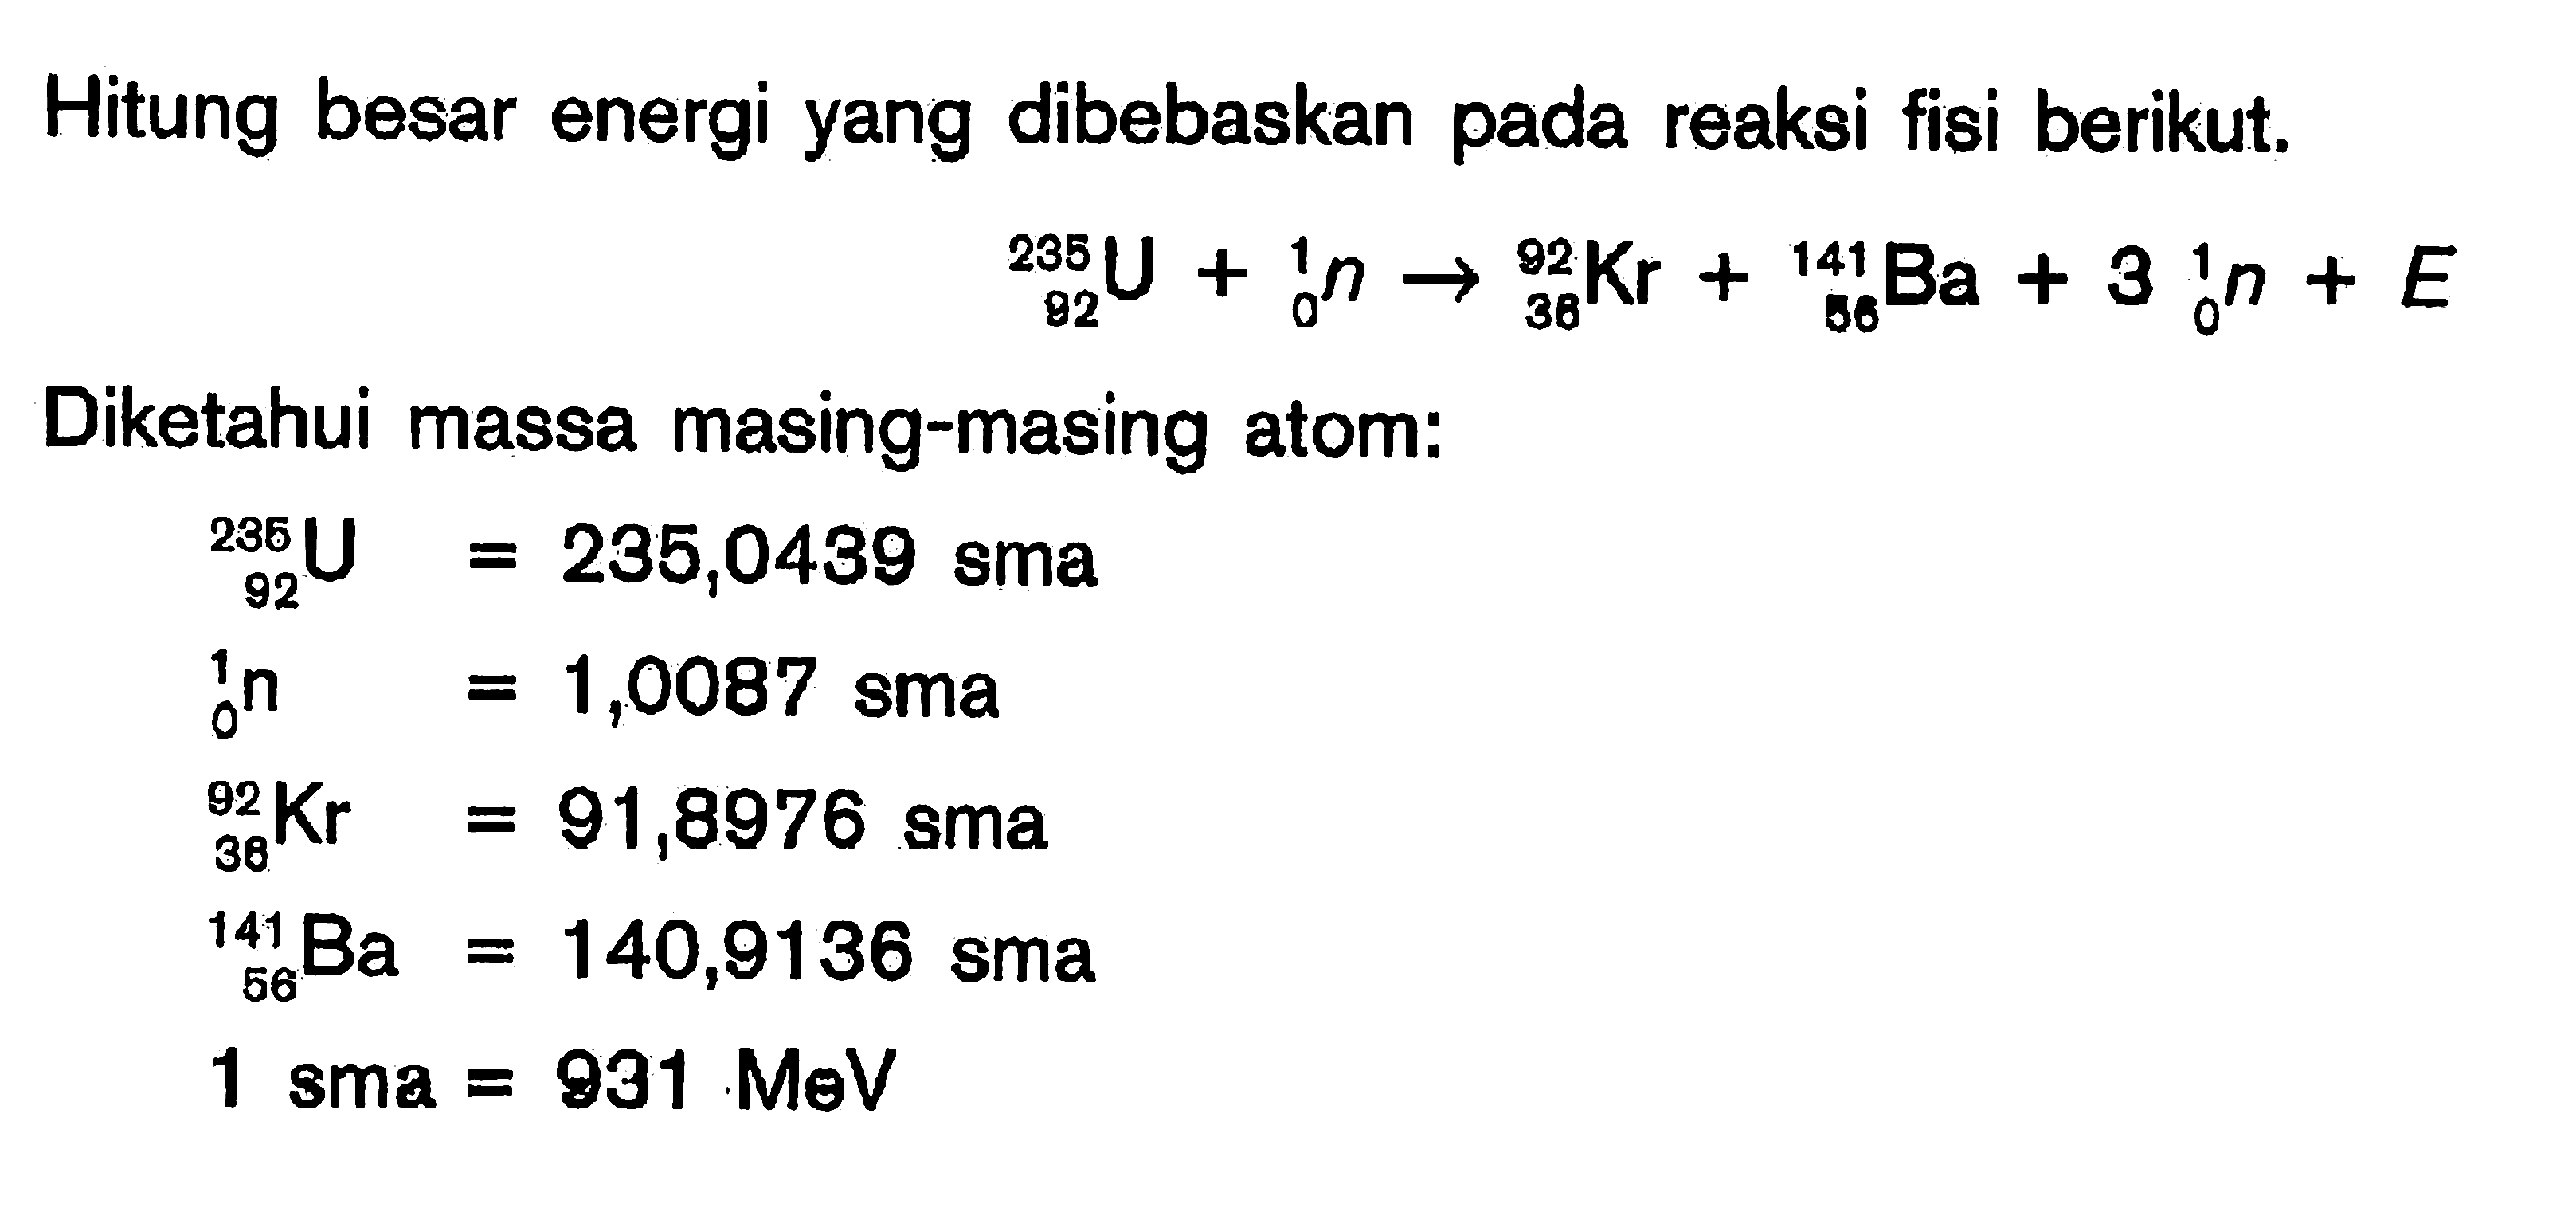 Hitung besar energi yang dibebaskan pada reaksi fisi berikut. 235 U 92 + 1 n 0 -> 92 Kr 38 + 141 Ba 56 + 3 1 n 0 + E Diketahui massa masing-masing atom: 236 U 92=235,0439 sma 1 n 0=1,0087 sma 92 Kr 38=91,8976 sma141 Ba 56=140,9136 sma 1 sma=931 MeV